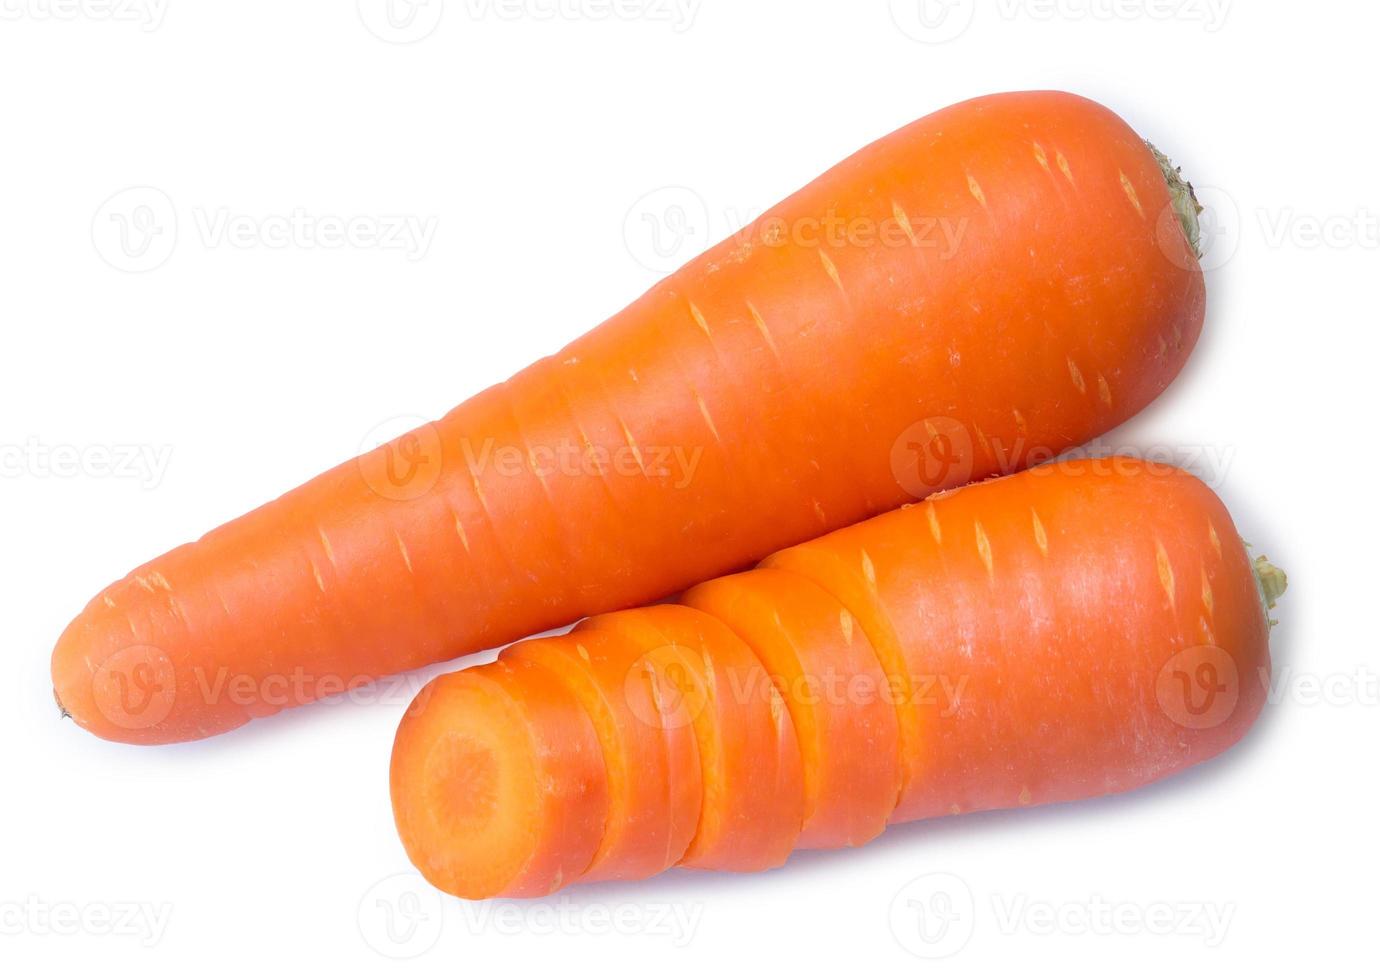 Colocación plana de dos zanahorias naranjas frescas con rodajas aisladas en fondo blanco con camino de recorte foto